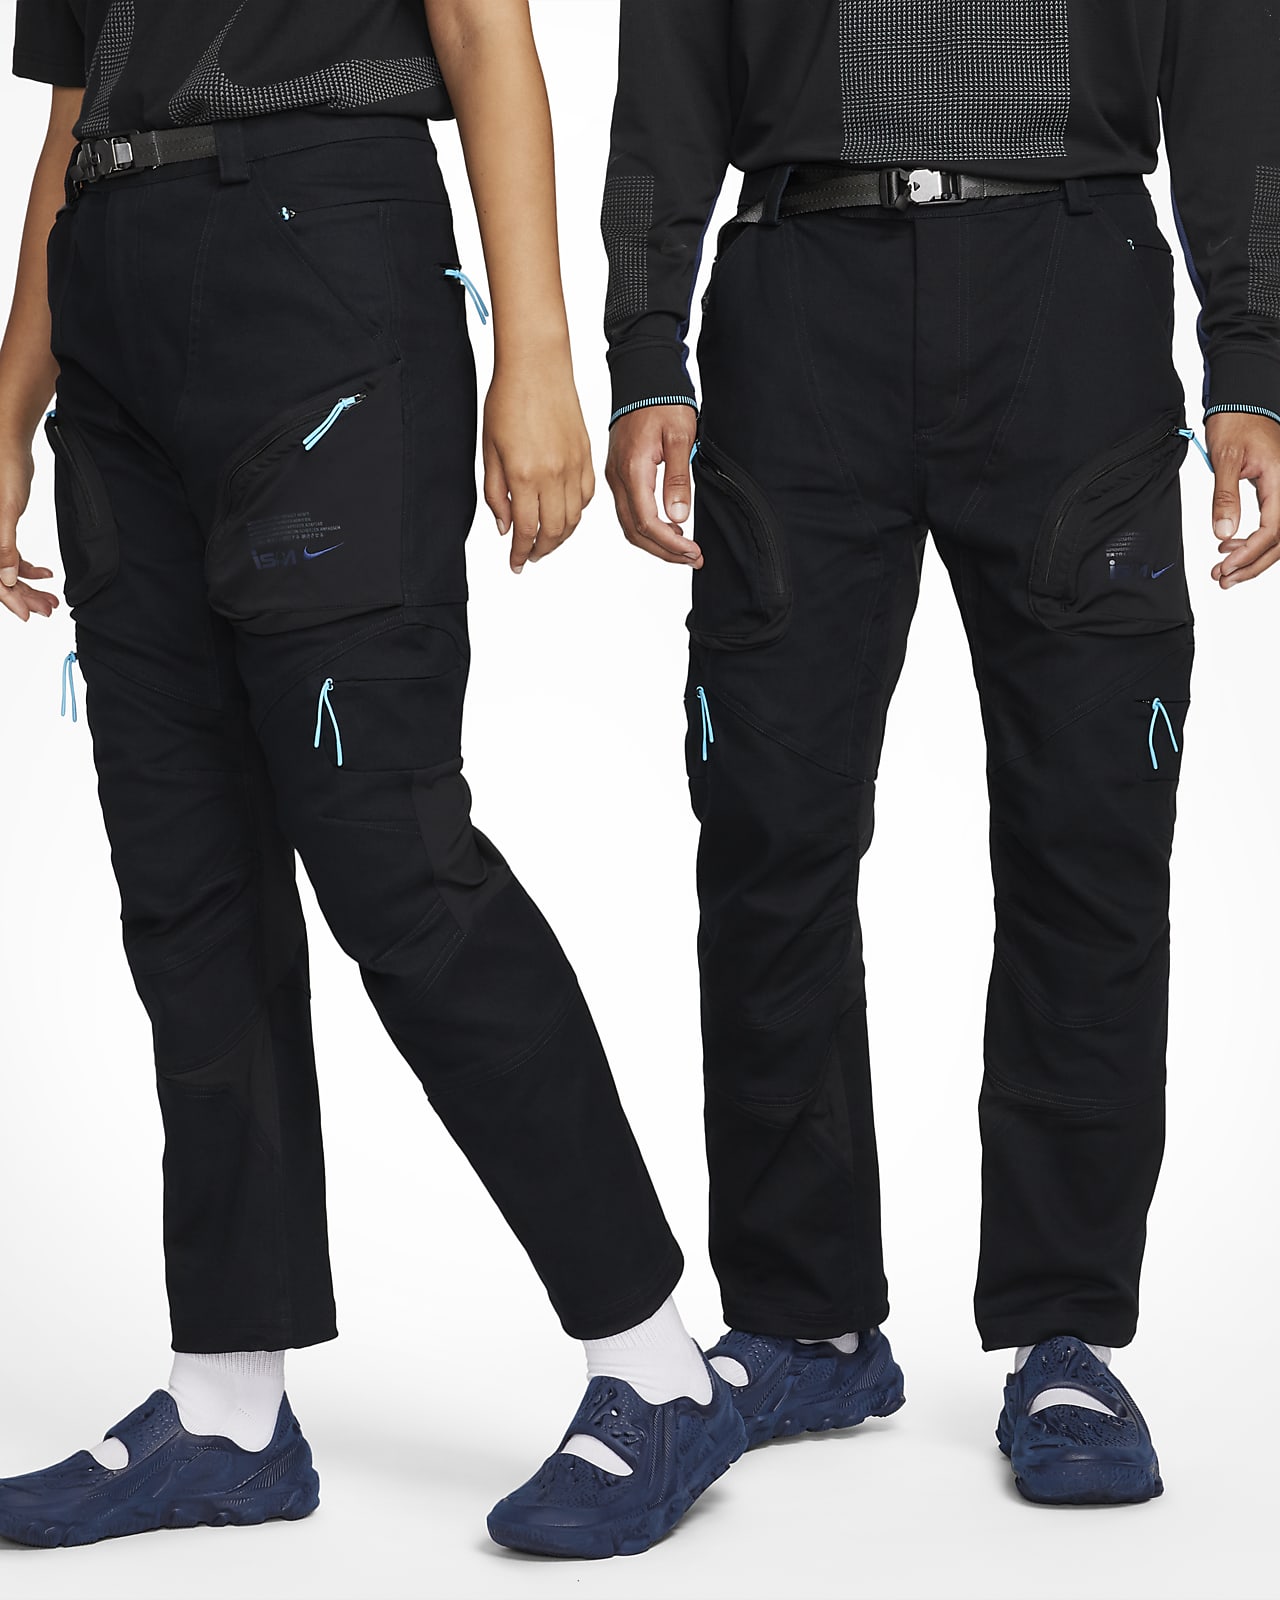 Pants 2.0 Nike ISPA